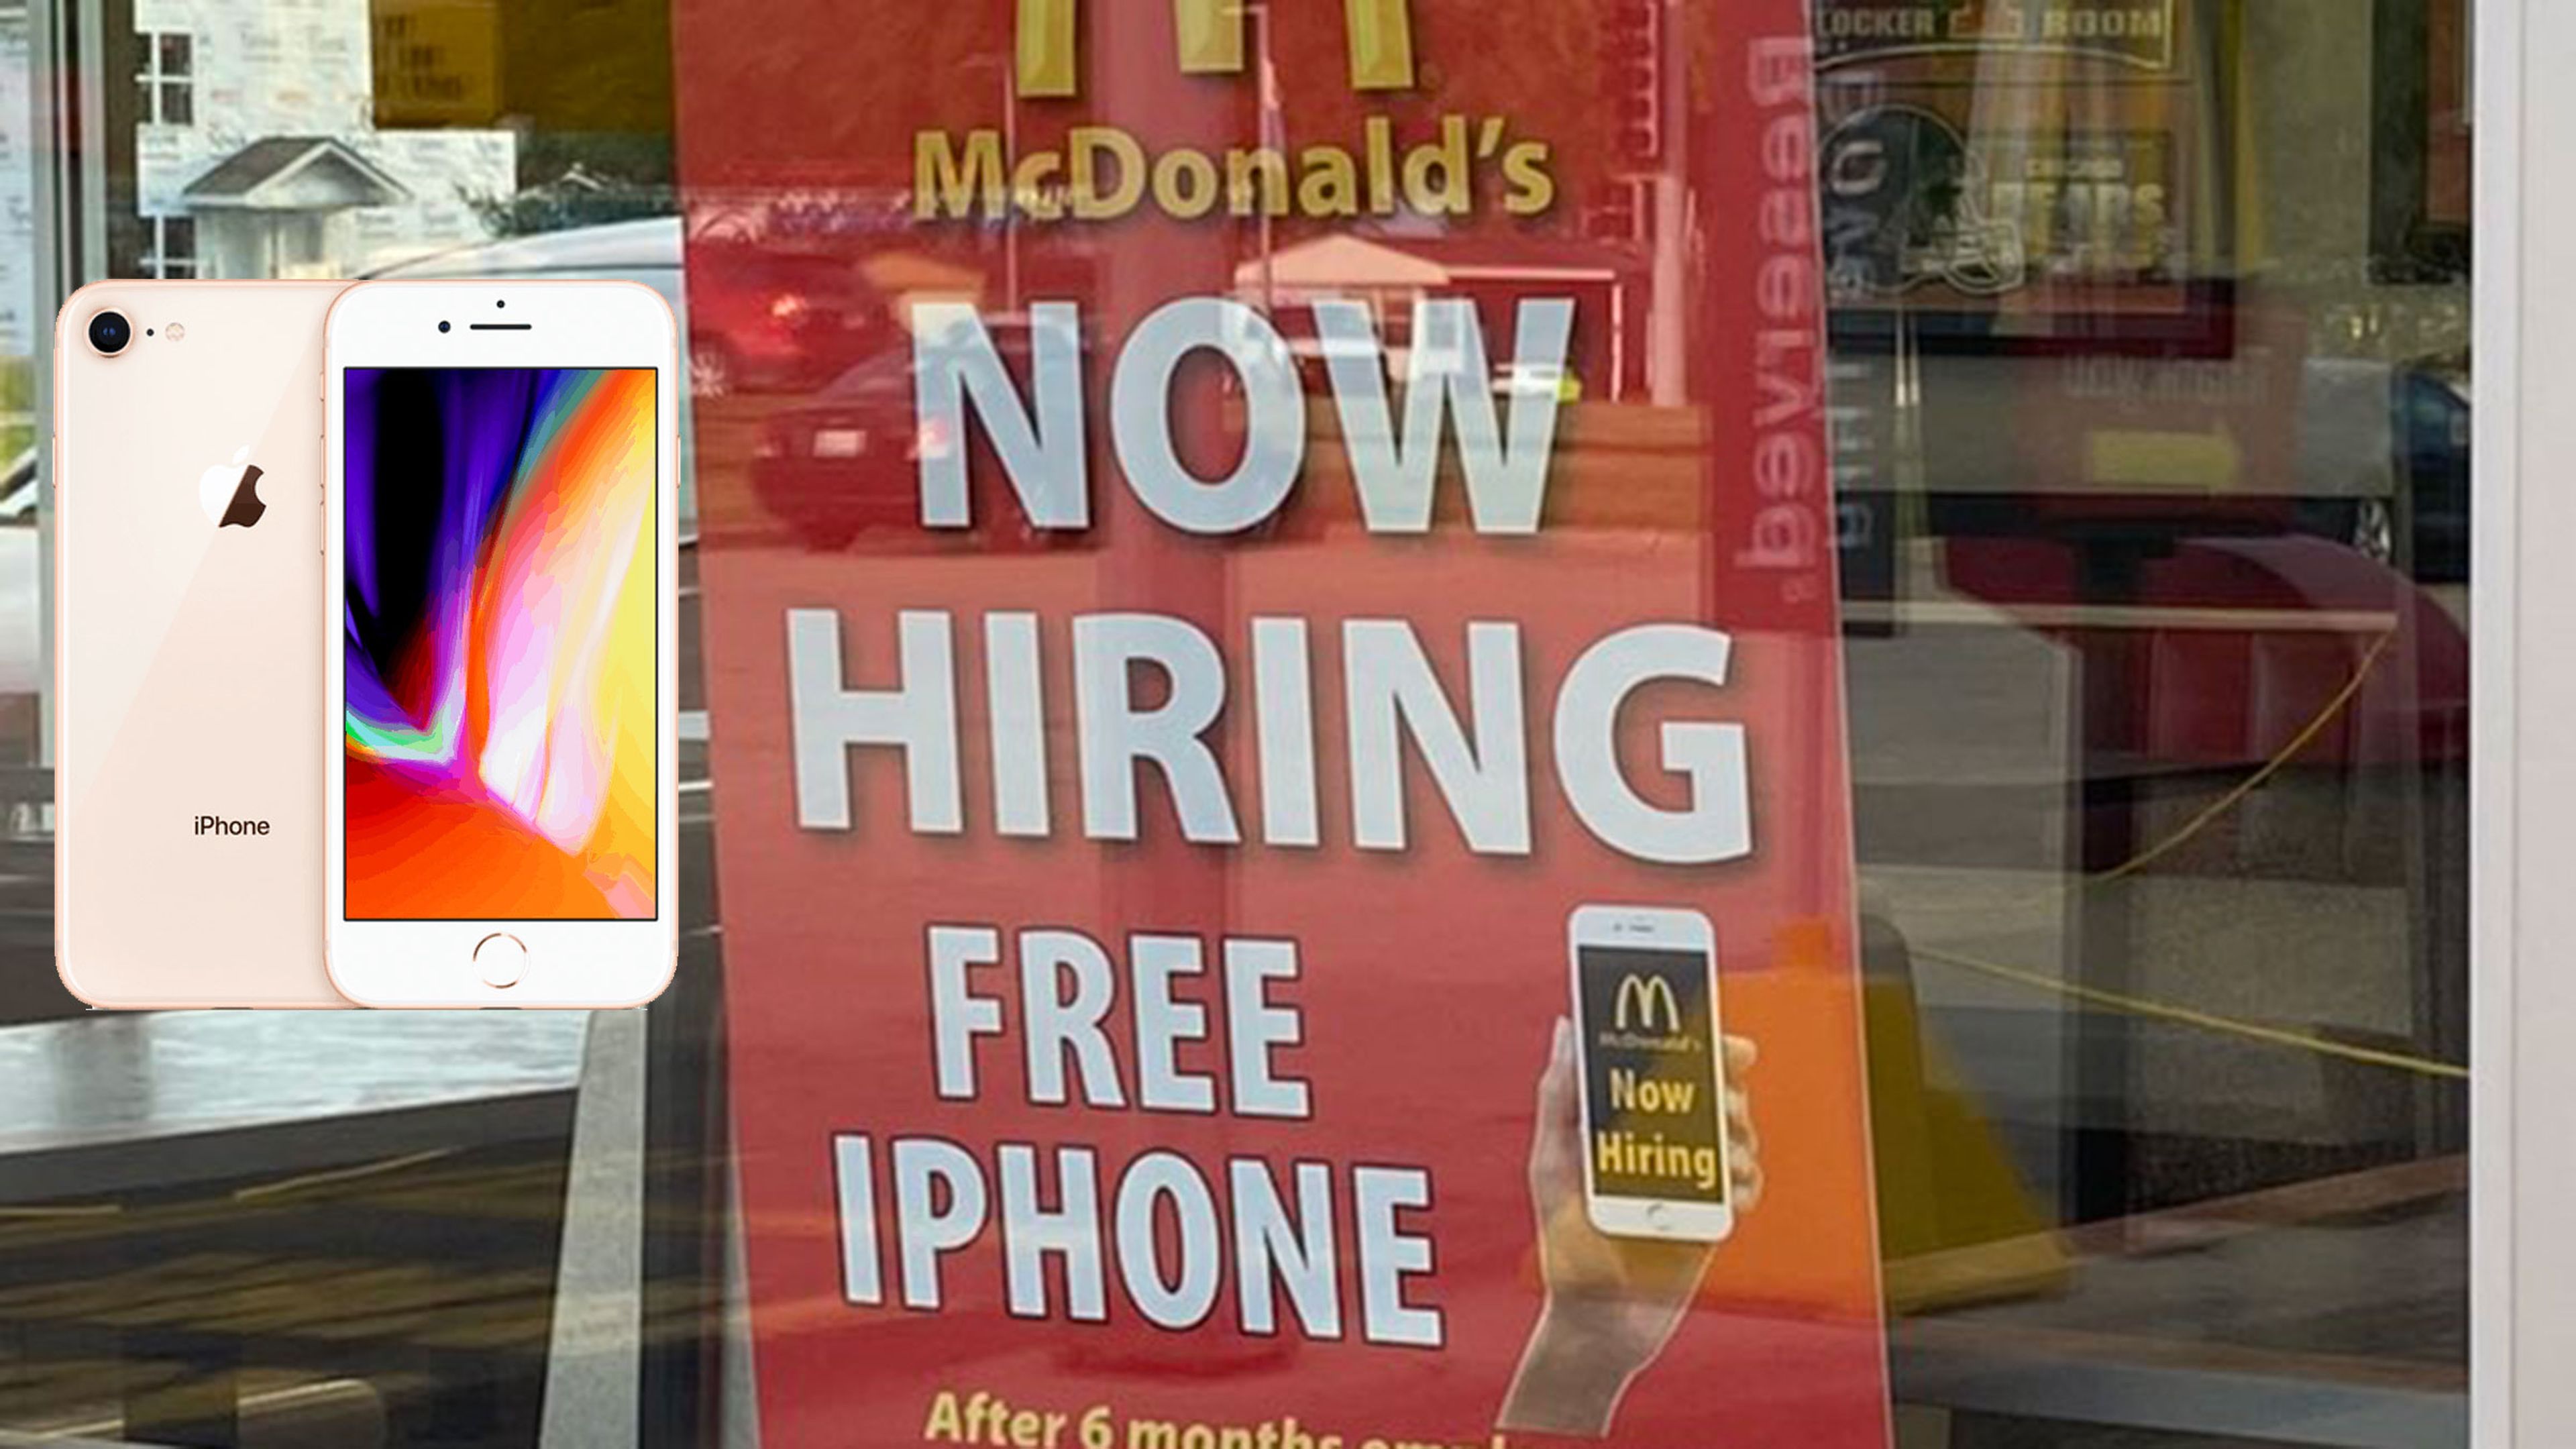 Oferta empleo McDonald's iPhone